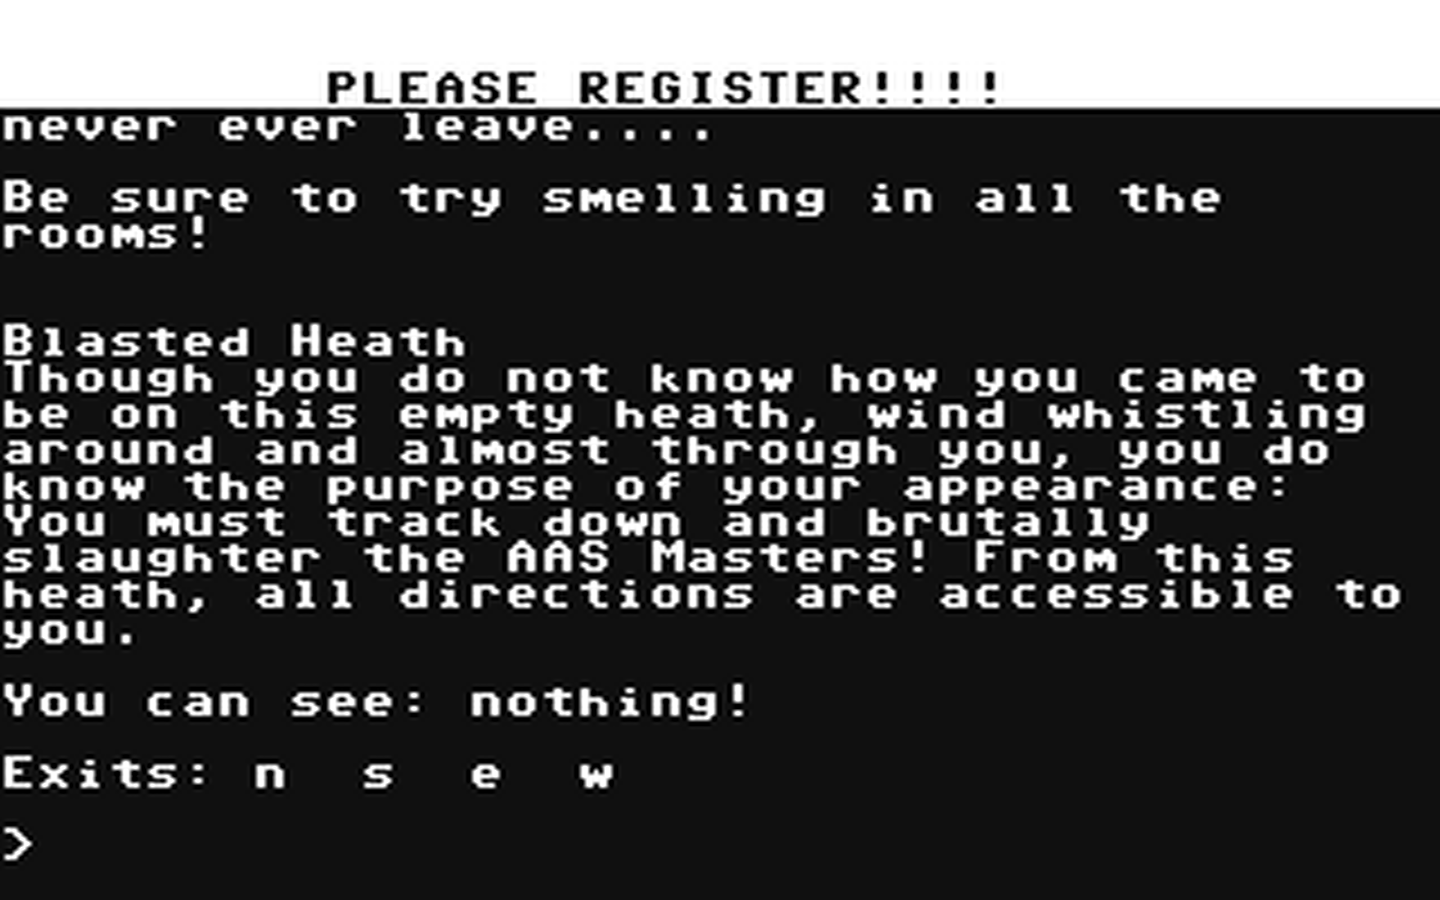 C64 GameBase AAS_Masters (Not_Published) 2003